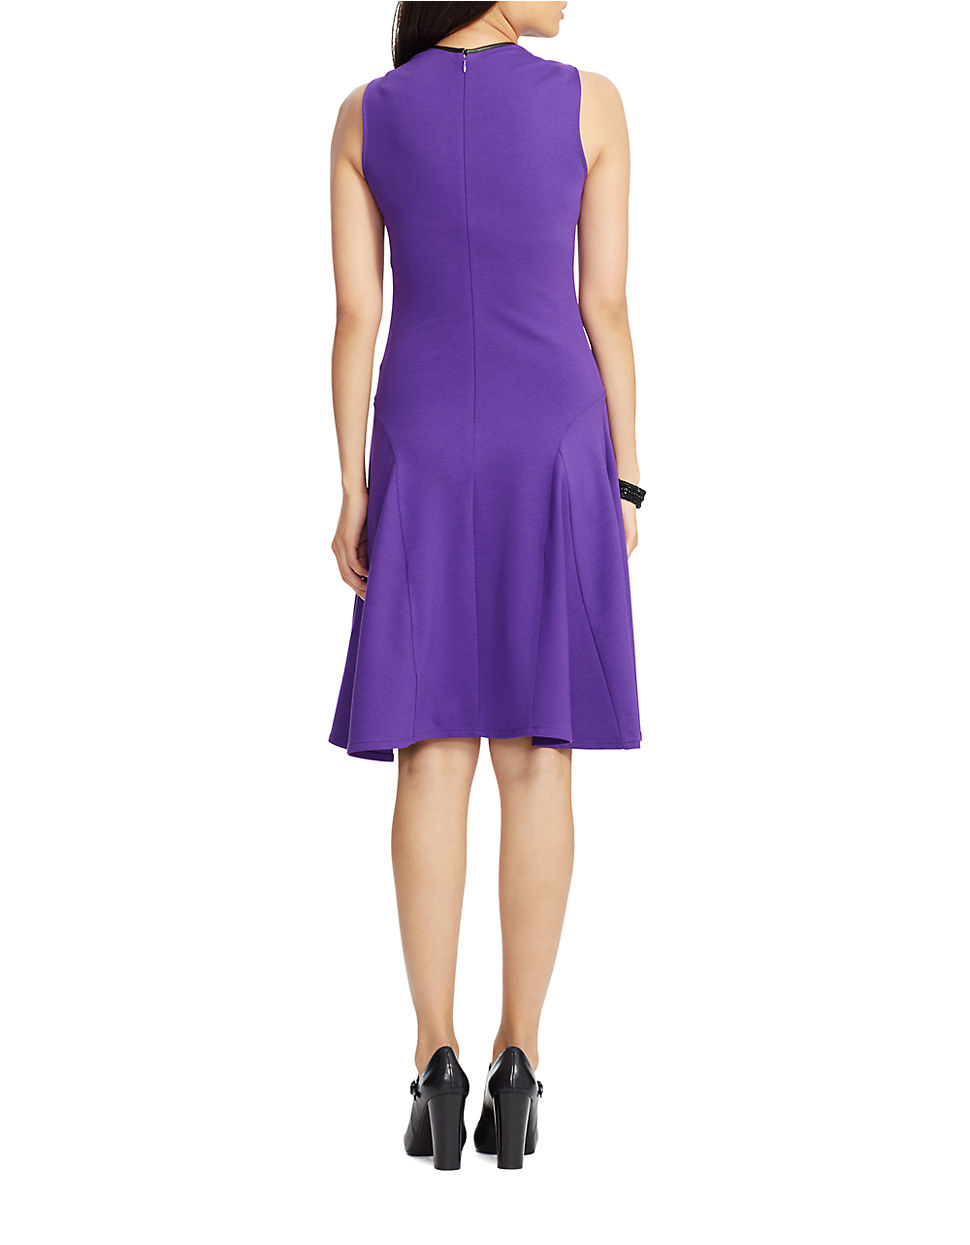 Lyst - Lauren By Ralph Lauren Ponte Sleeveless Dress in Purple